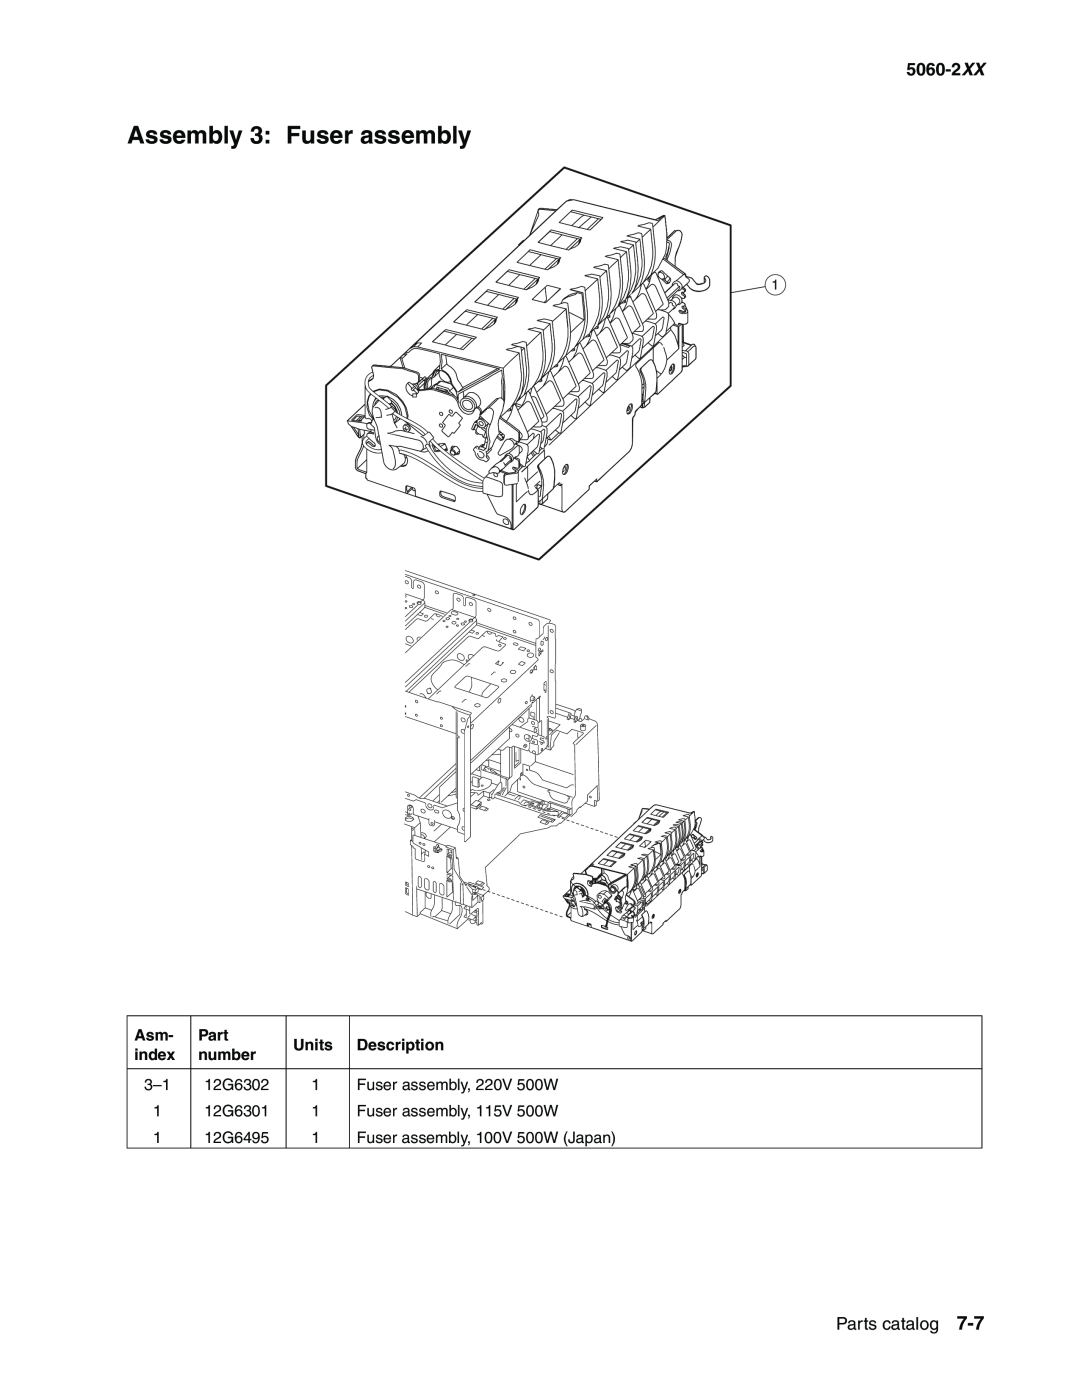 Lexmark 5060-2XX manual Assembly 3 Fuser assembly, Parts catalog, Units, Description, index, number 